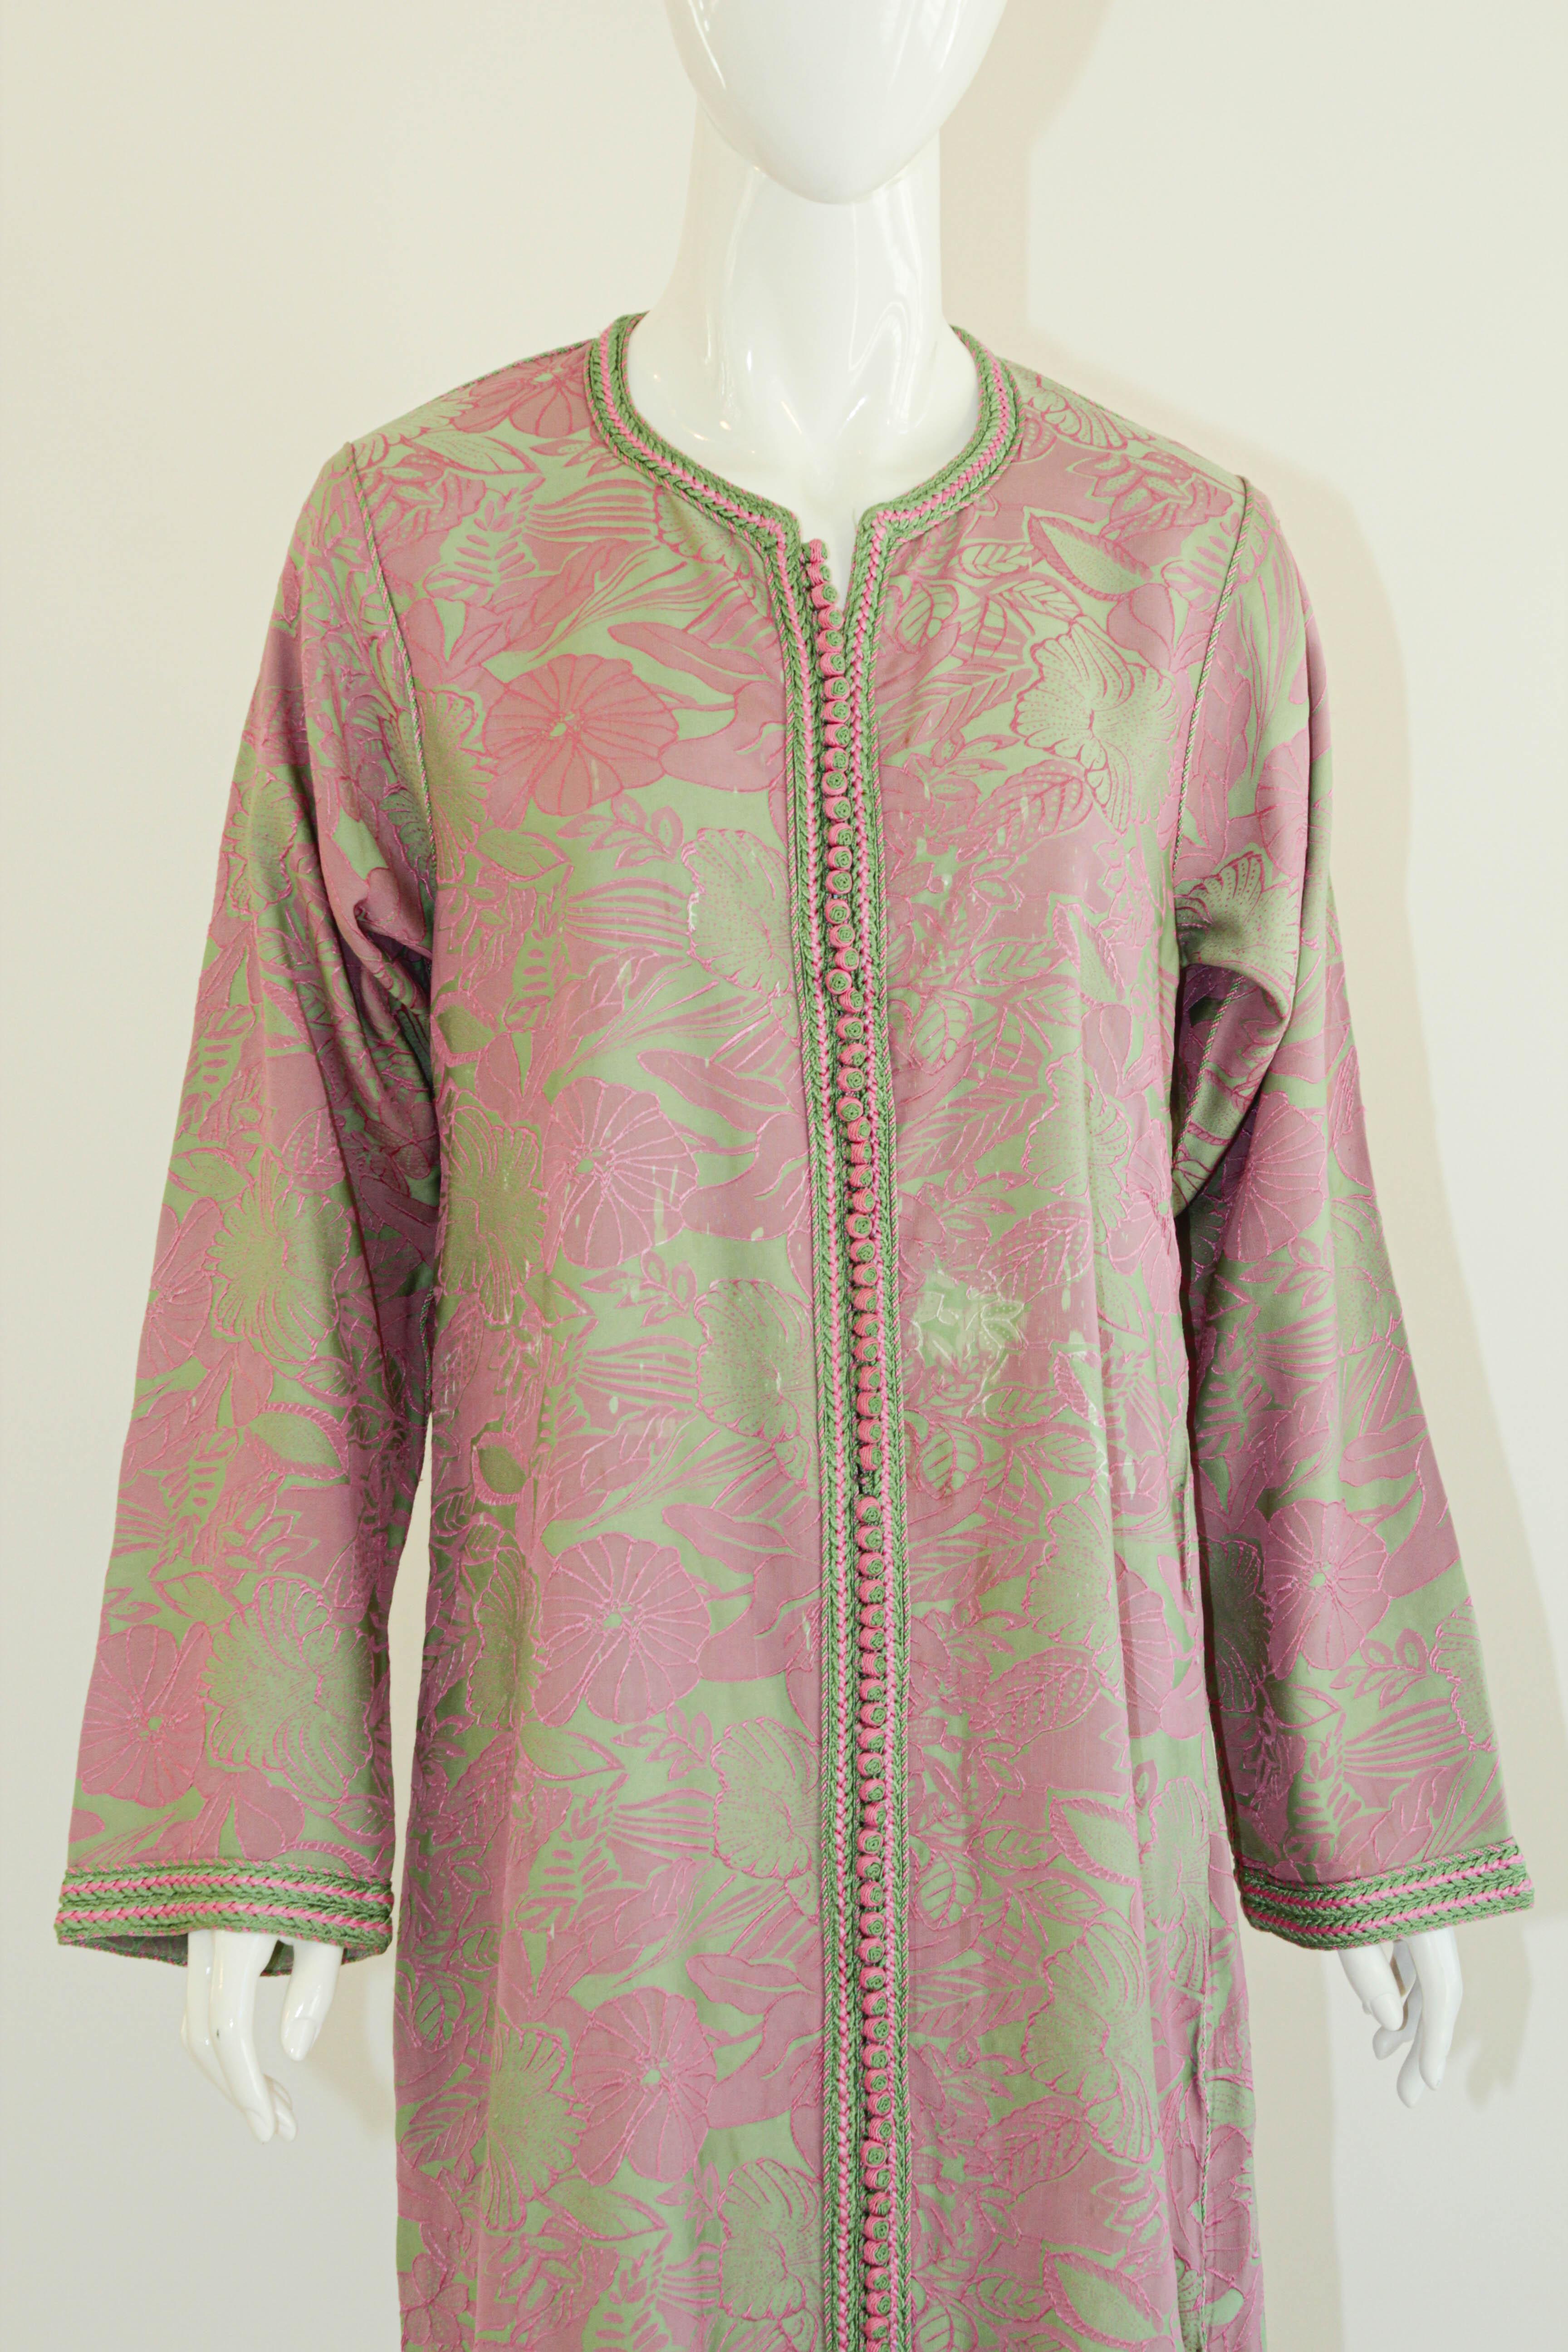 Caftan marocain vintage avec bordure rose et verte en vente 8